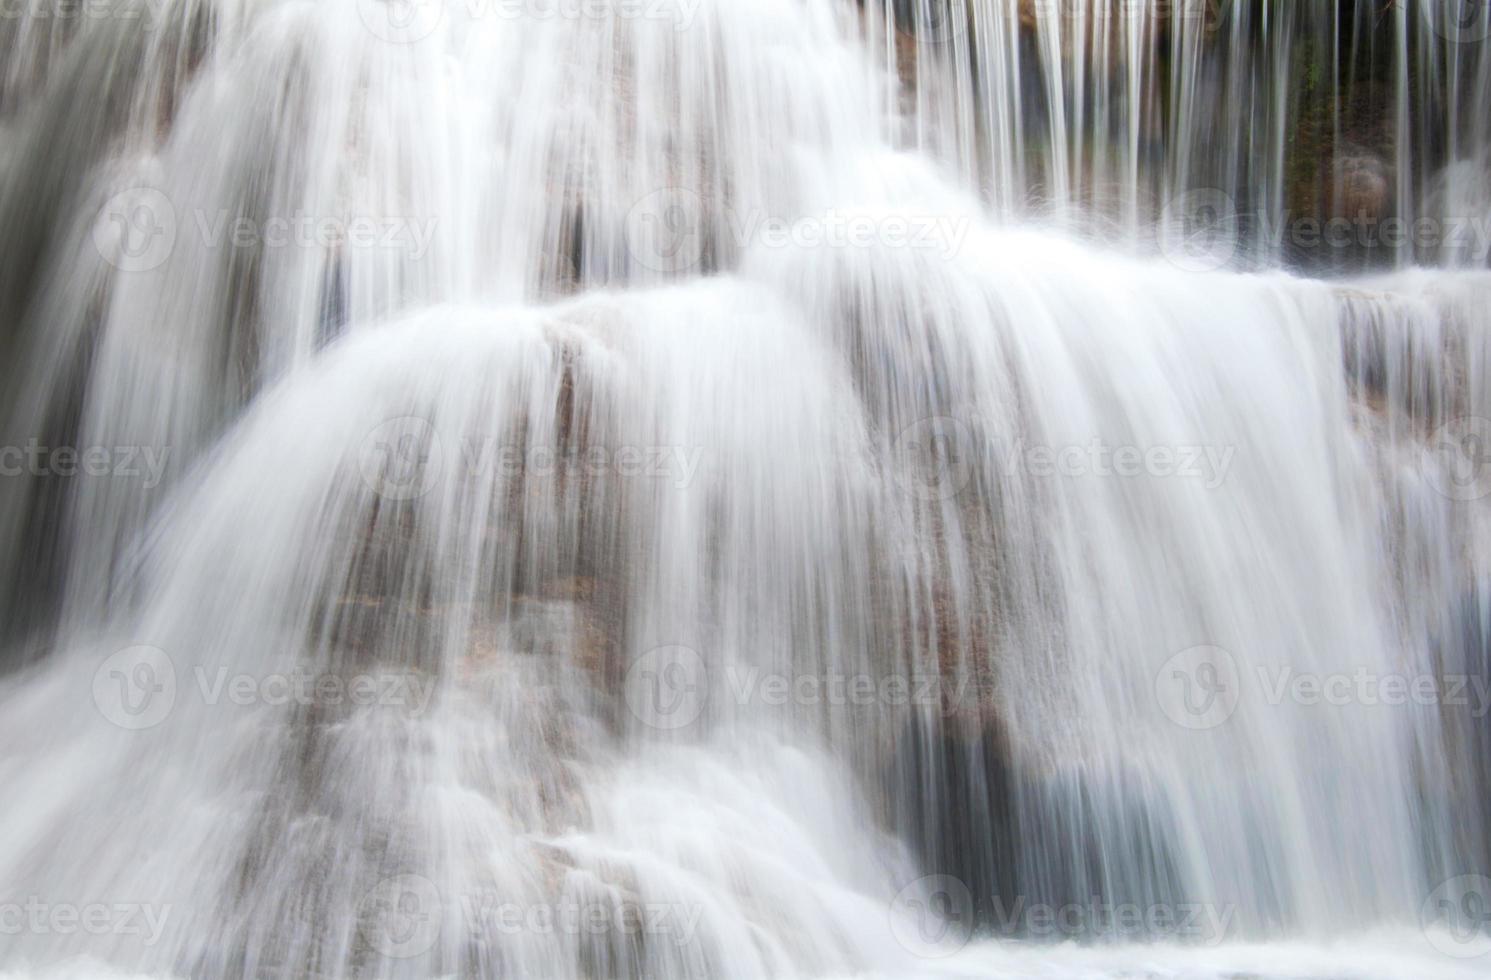 vattenfall i djup regnskogsjungel vid nationalparken, foto